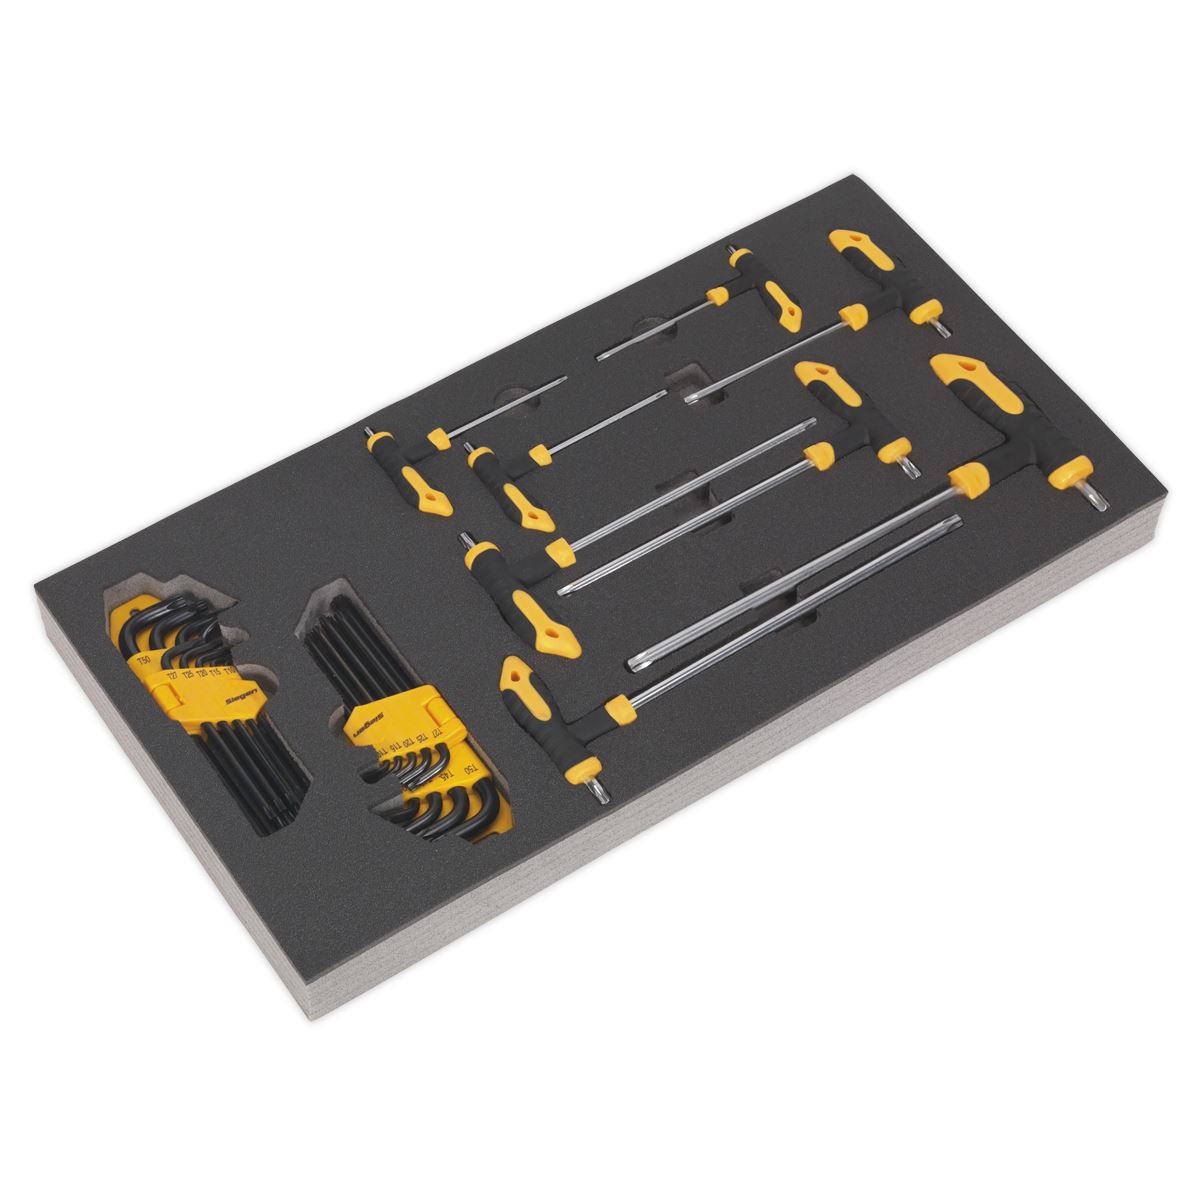 Siegen 26 Piece Tool Tray With T-Handle & Standard TRX-Star Key Sets